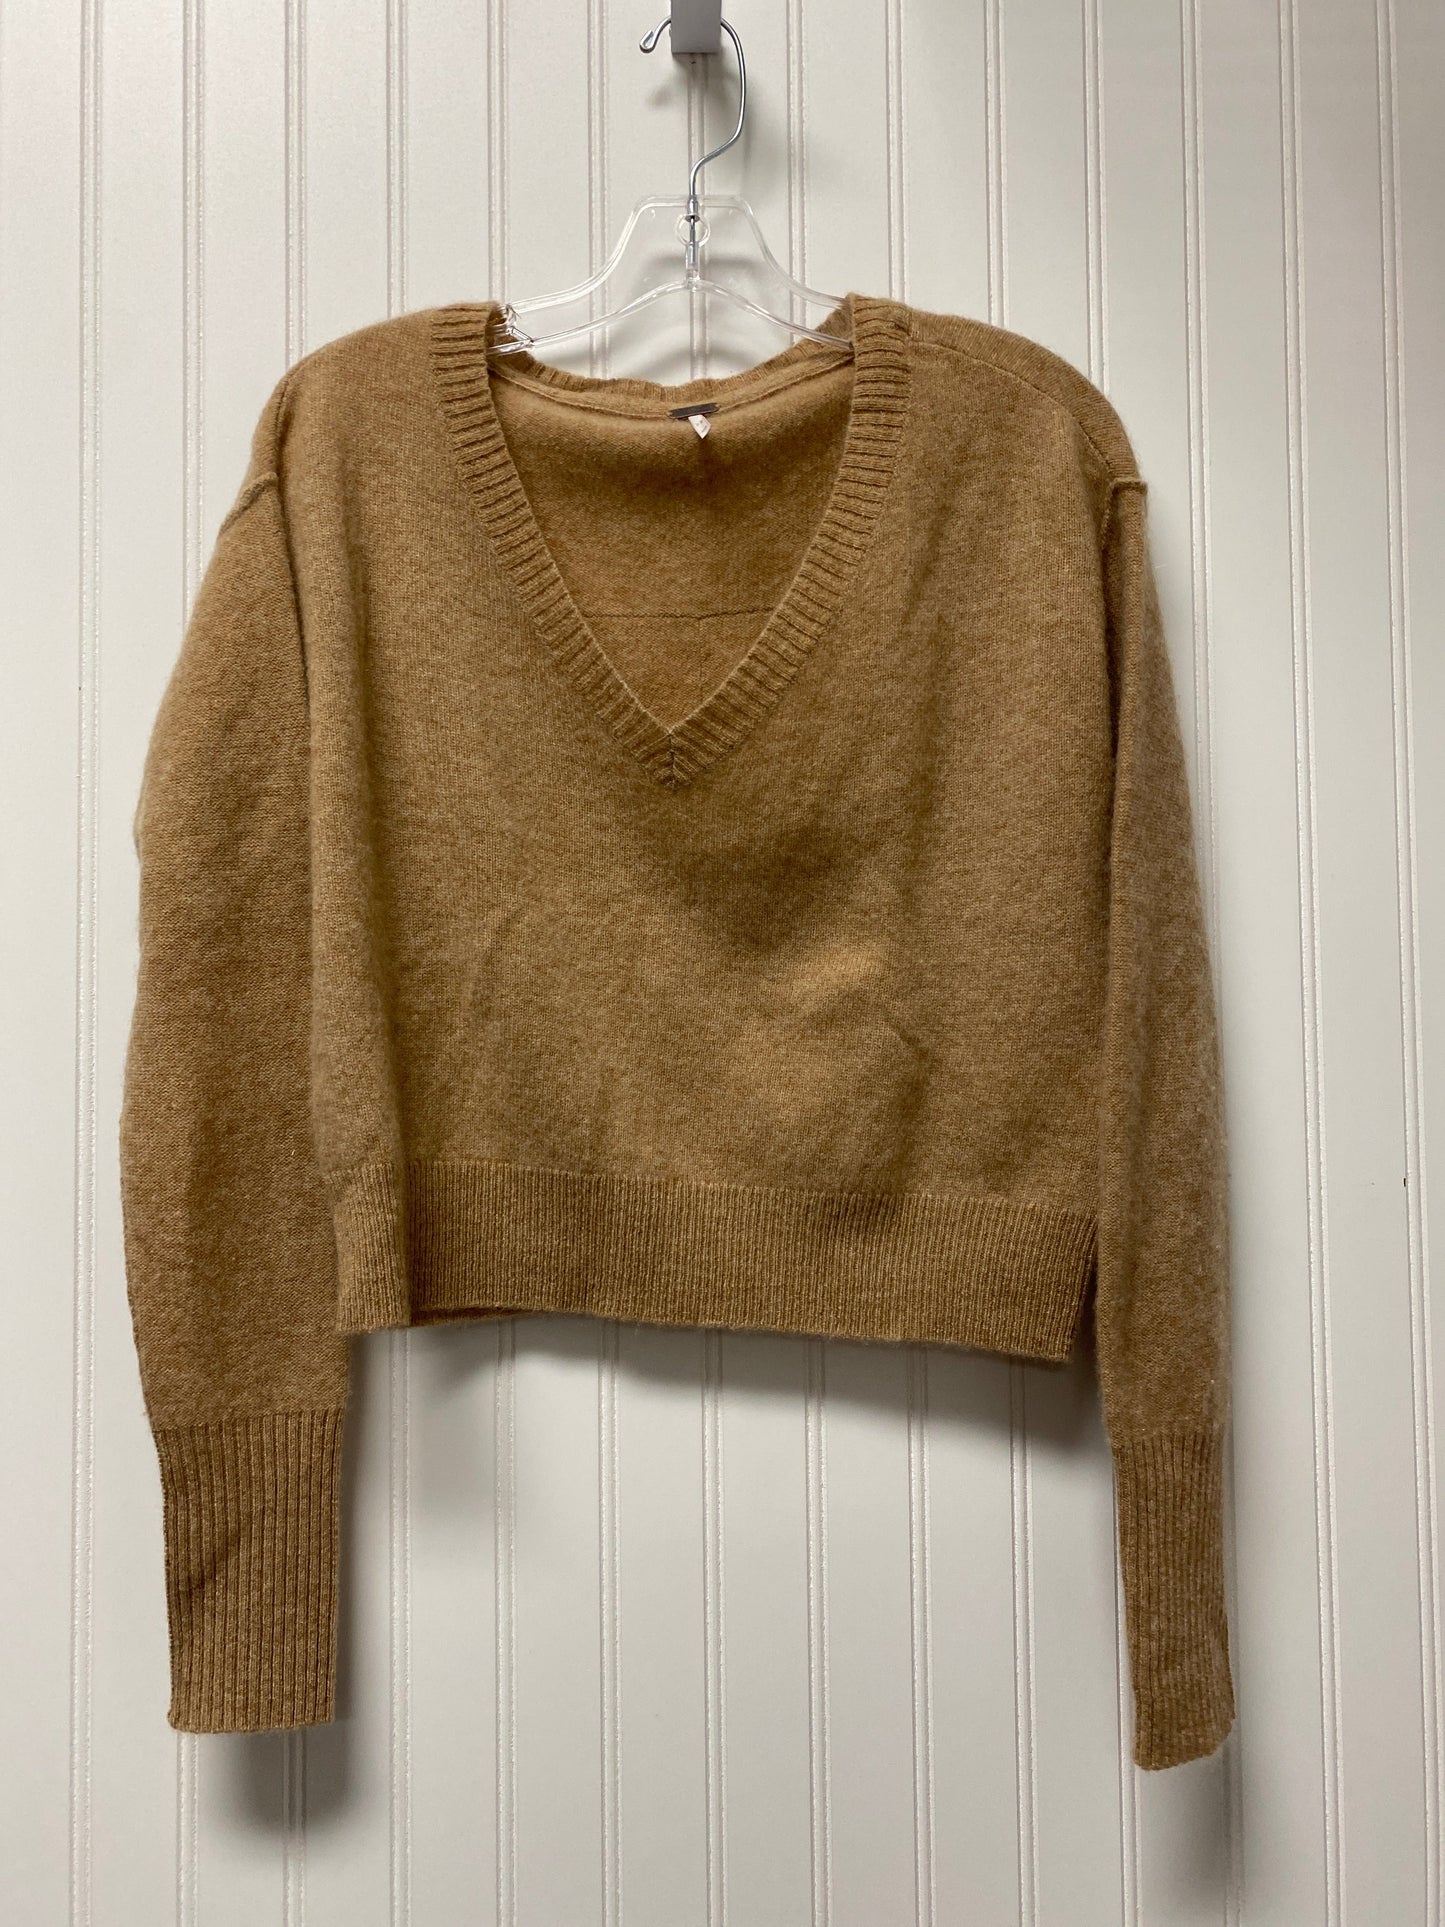 Tan Sweater Cashmere Free People, Size Xs